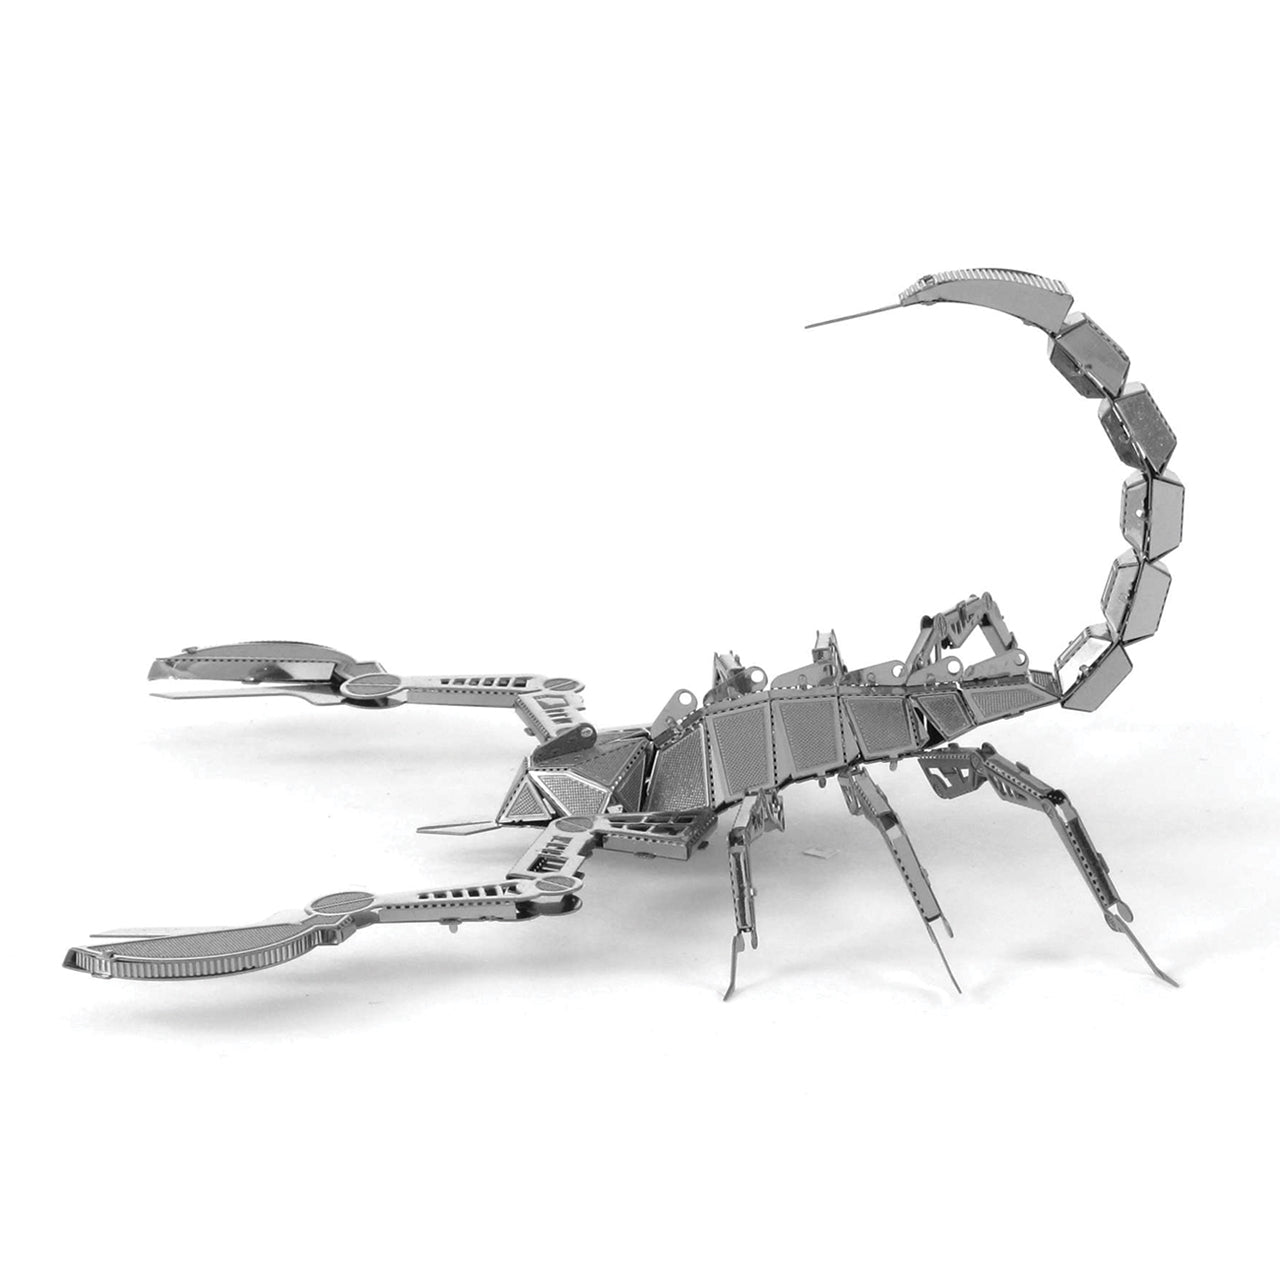 Scorpion რკინის ასაწყობი მოდელი